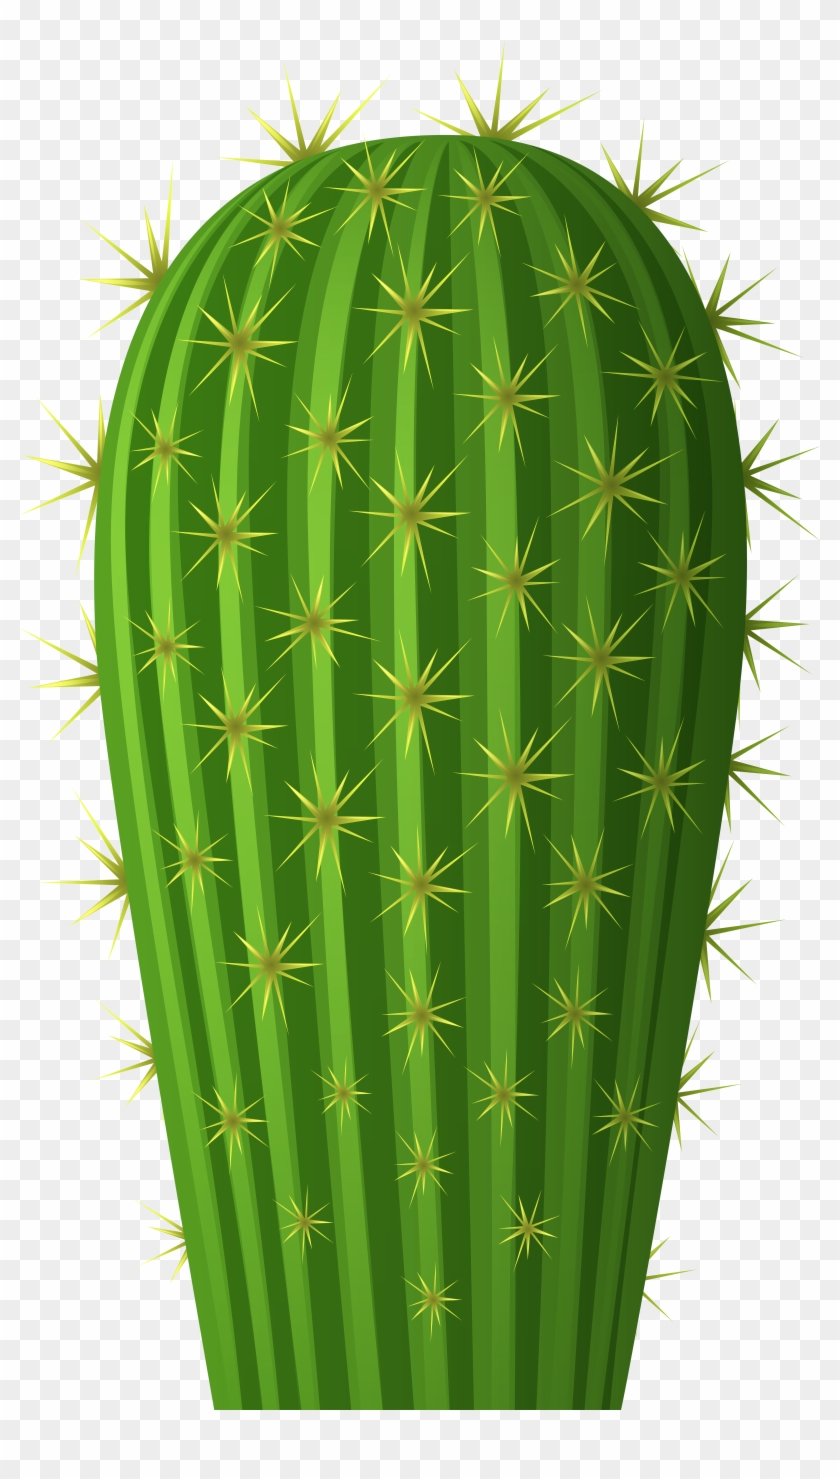 Cactus Png Clip Art Image - Cactus Png Transparent Png #586233